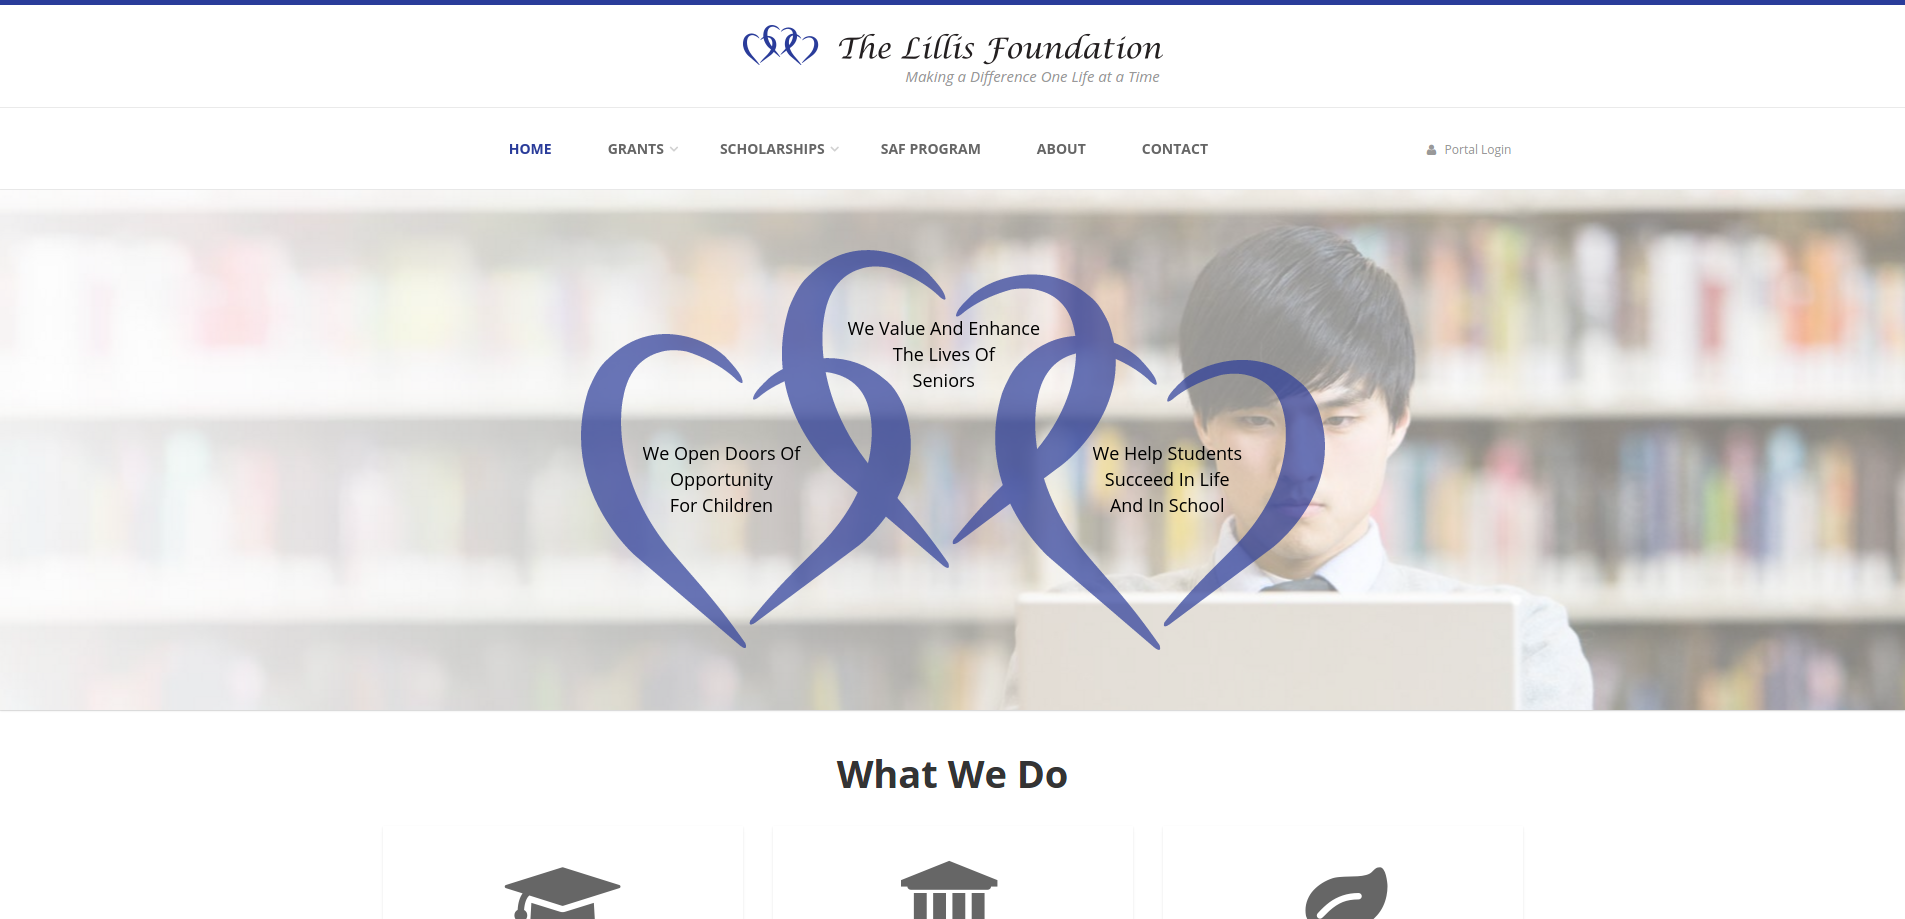 The Lillis Foundation